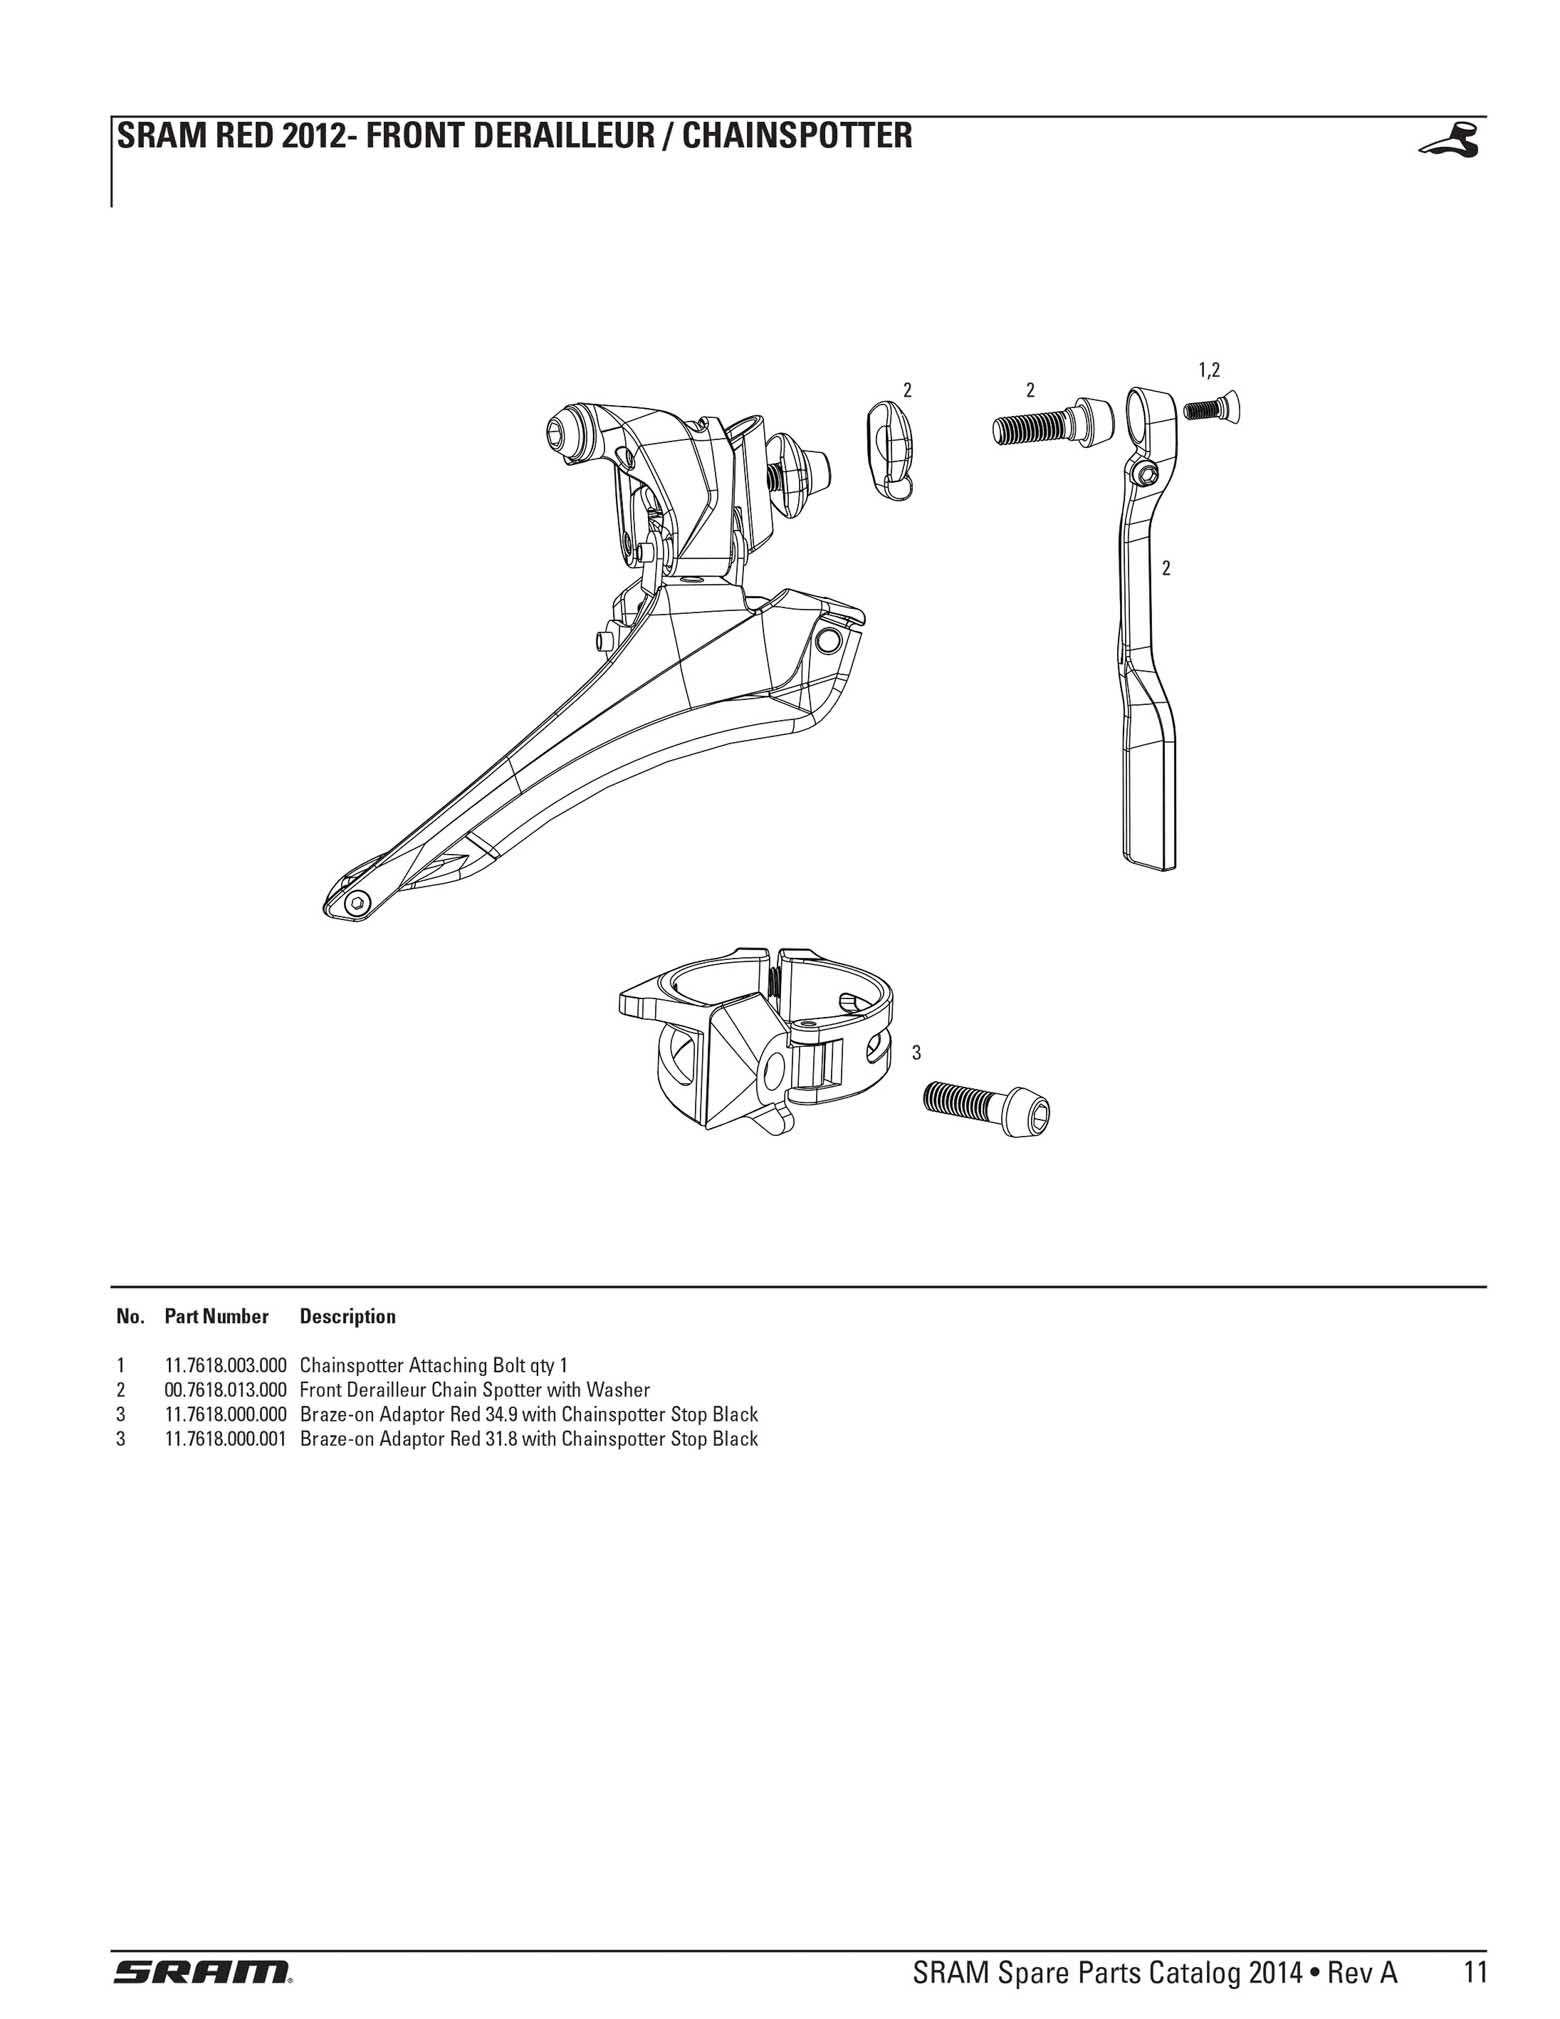 SRAM - Spare Parts Catalog 2014 page 011 main image